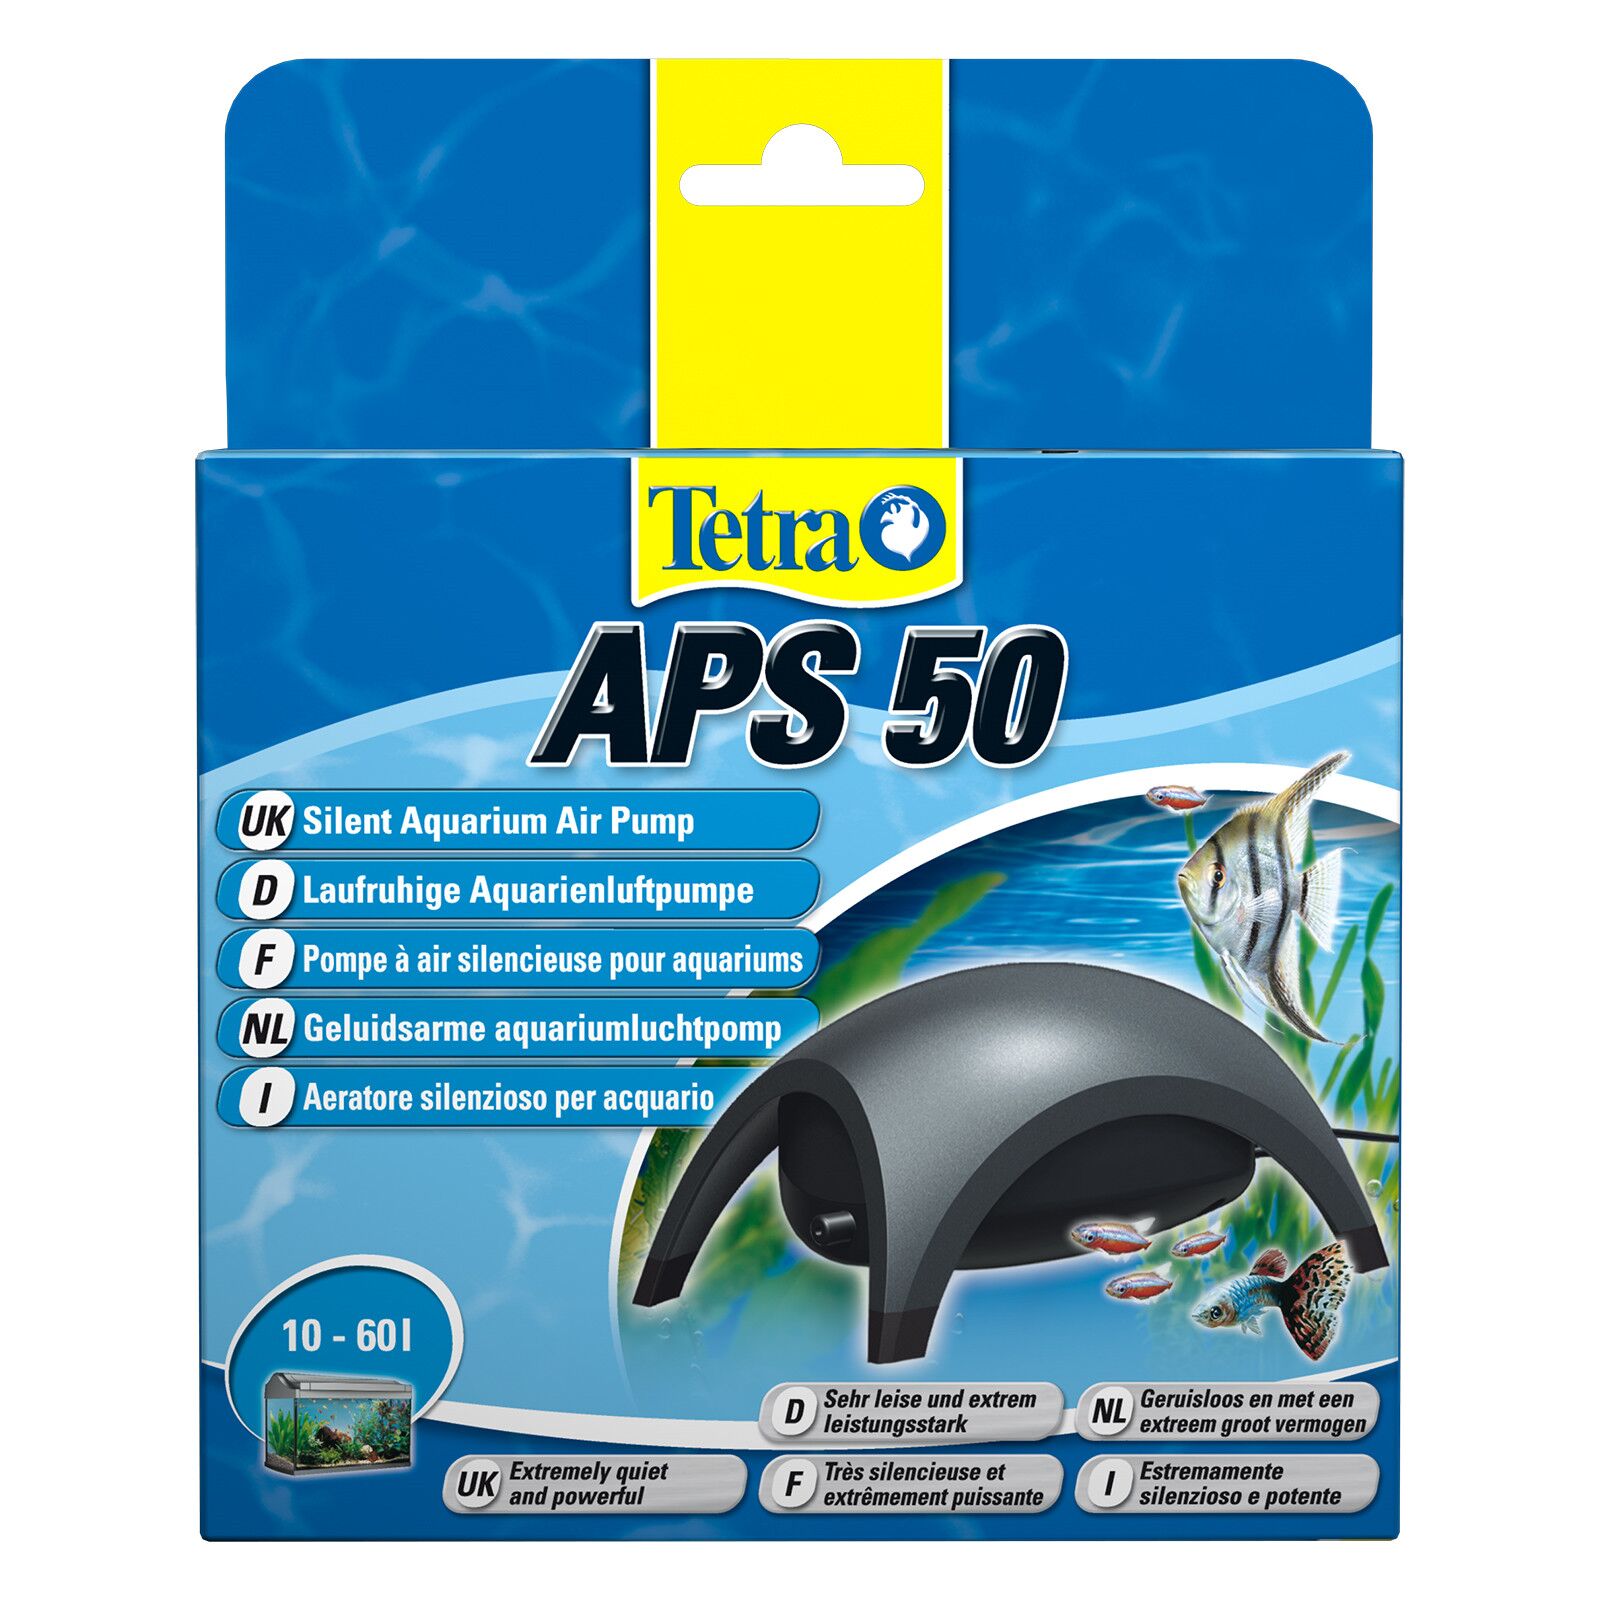 Tetra - Aquarium Air Pump Anthracite - APS | Aquasabi - Aquascaping Shop